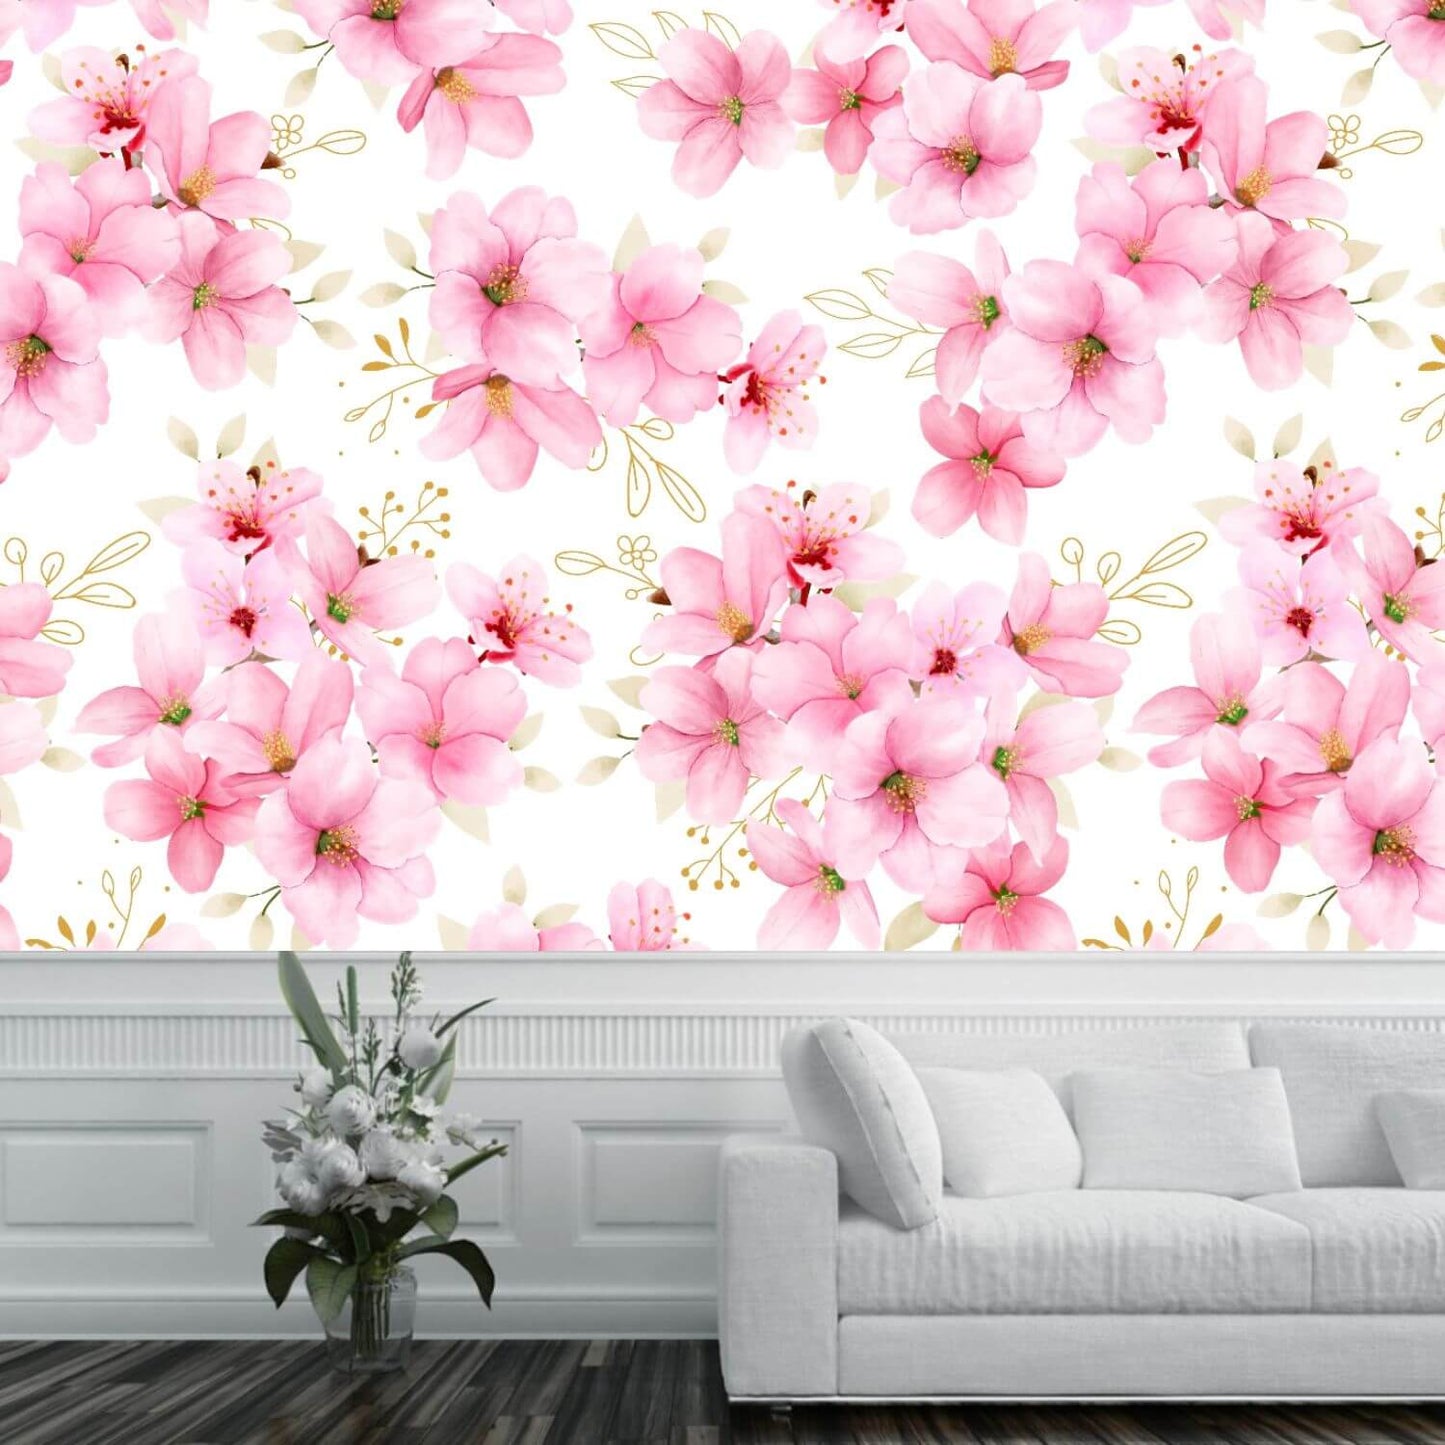 Watercolor Pink Cherry Blossoms Mural Wallpaper (SqM)